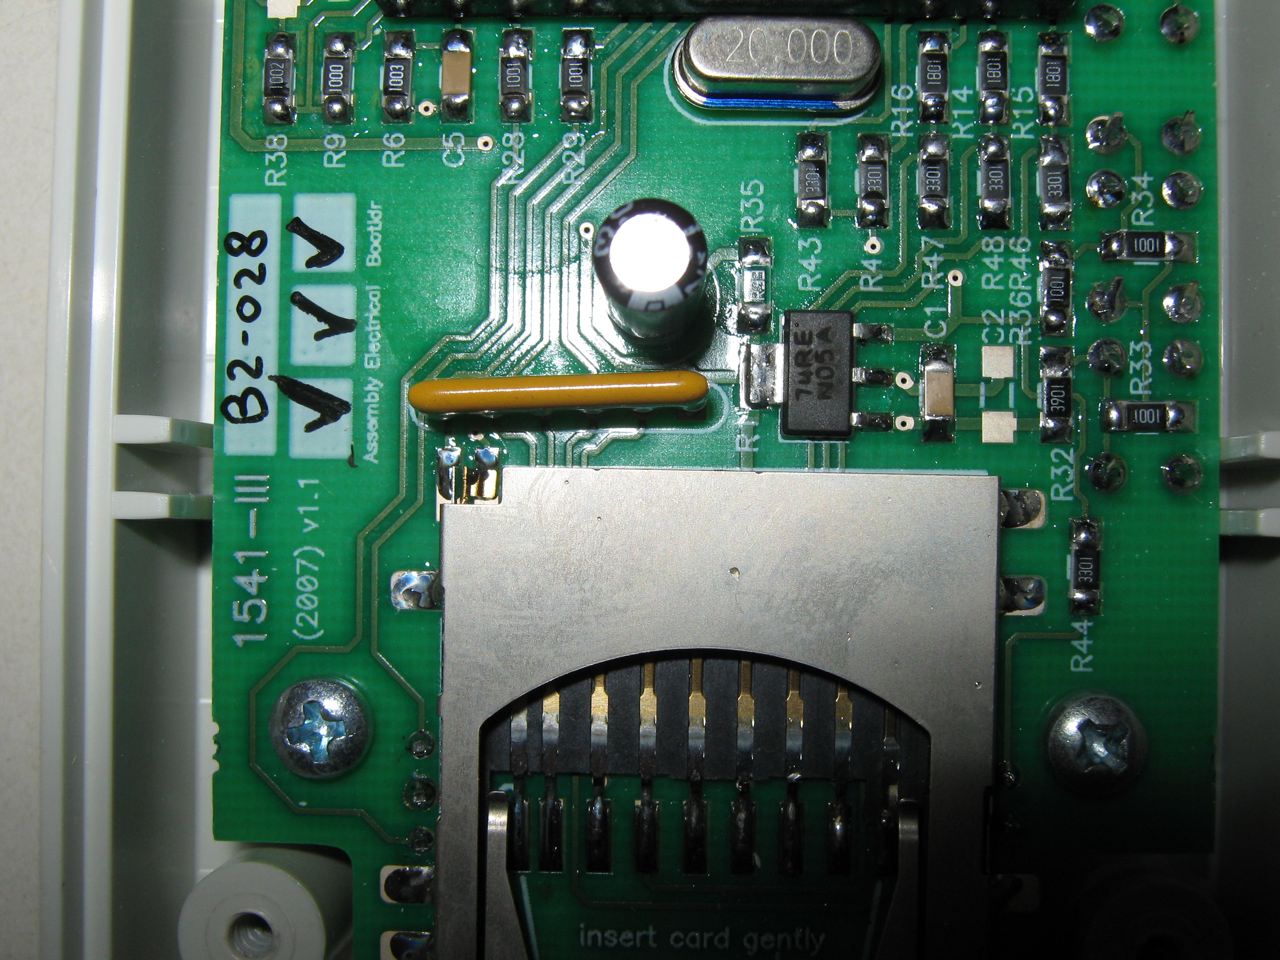 Srvinfo reg 1541. MMC 7040. Mmc010066. Akai BT headpfone Ch-2113(f3)main PCB rev0 2015-5-15. Pi-1541pa разборка.